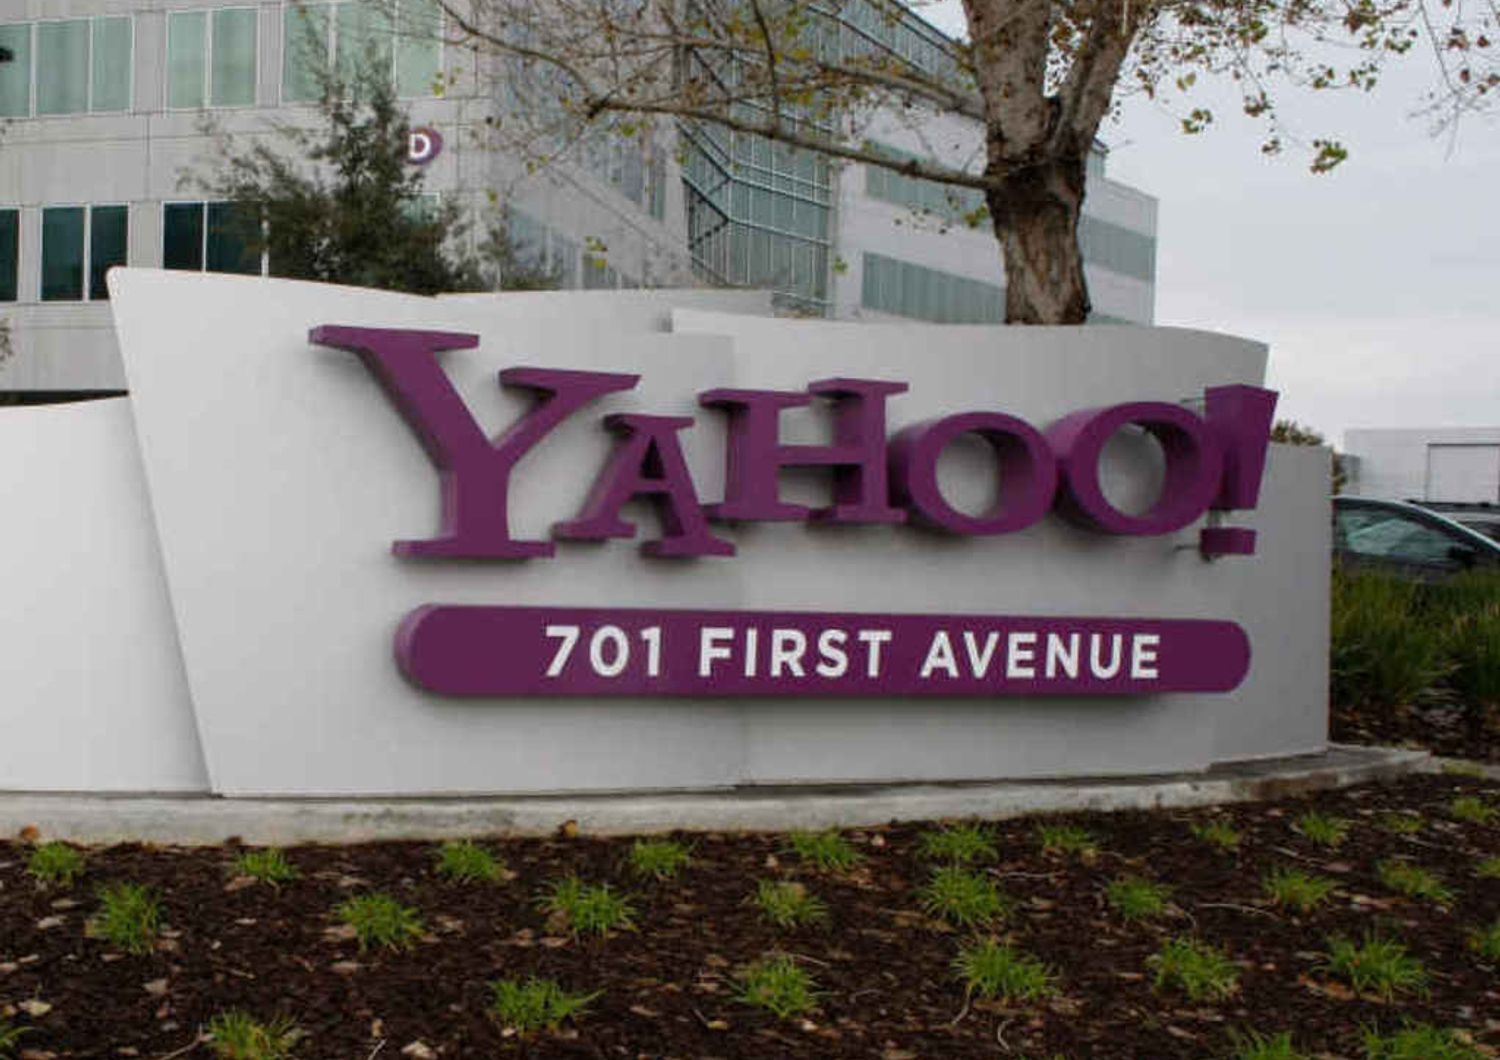 Top manager donna di Yahoo denunciata per molestie a una collega